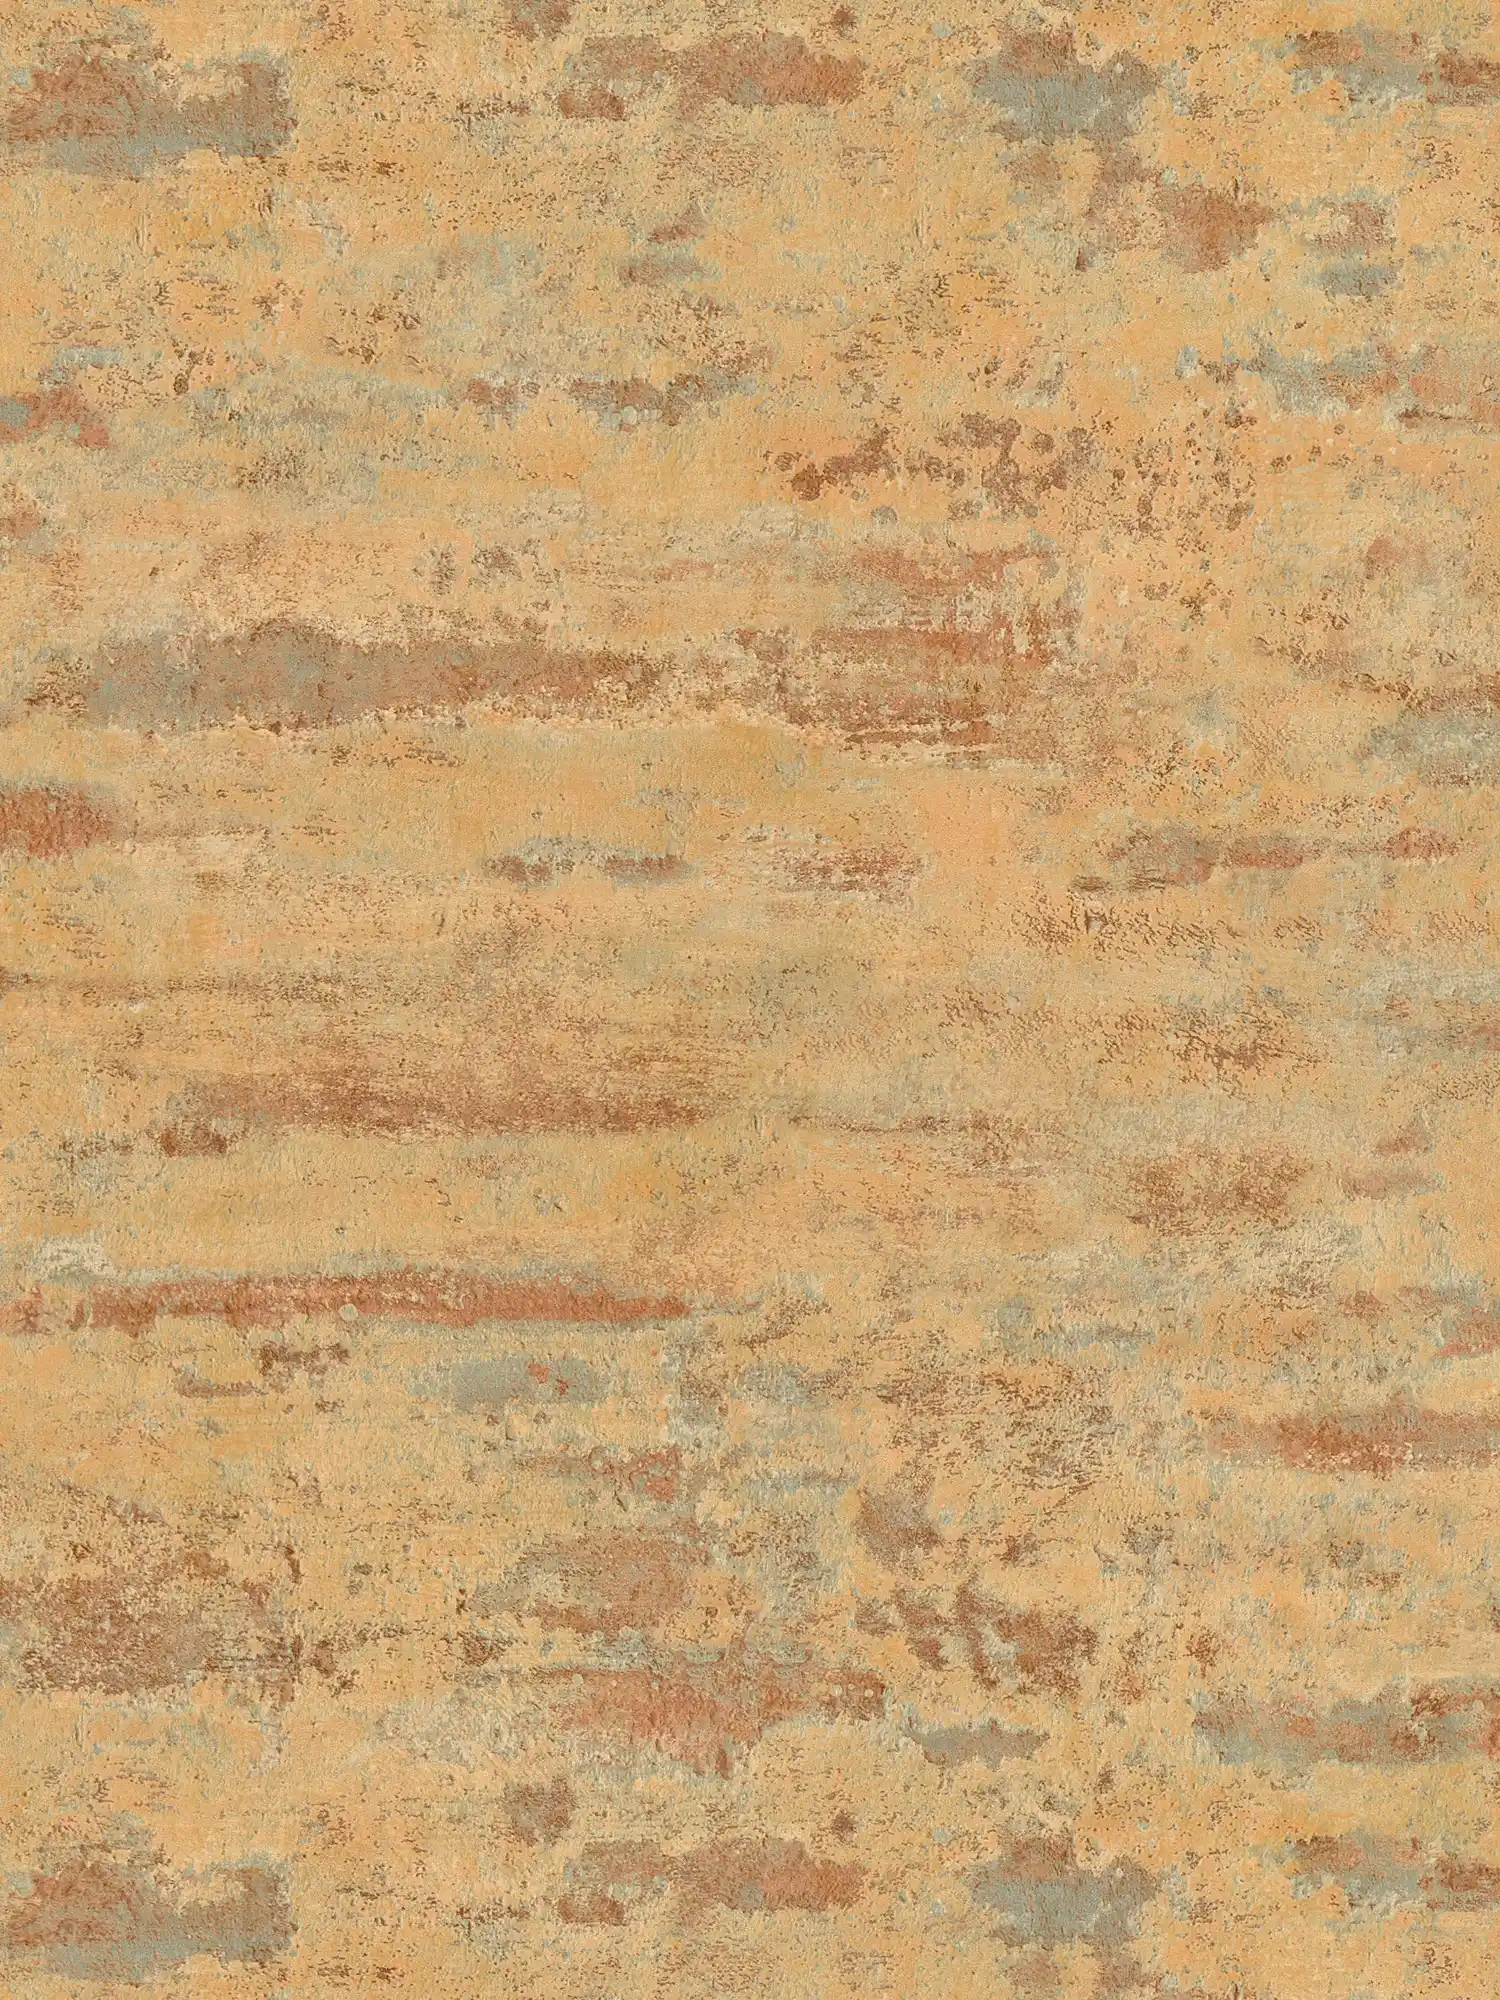         Non-woven wallpaper rust look & used look - orange, grey, blue
    